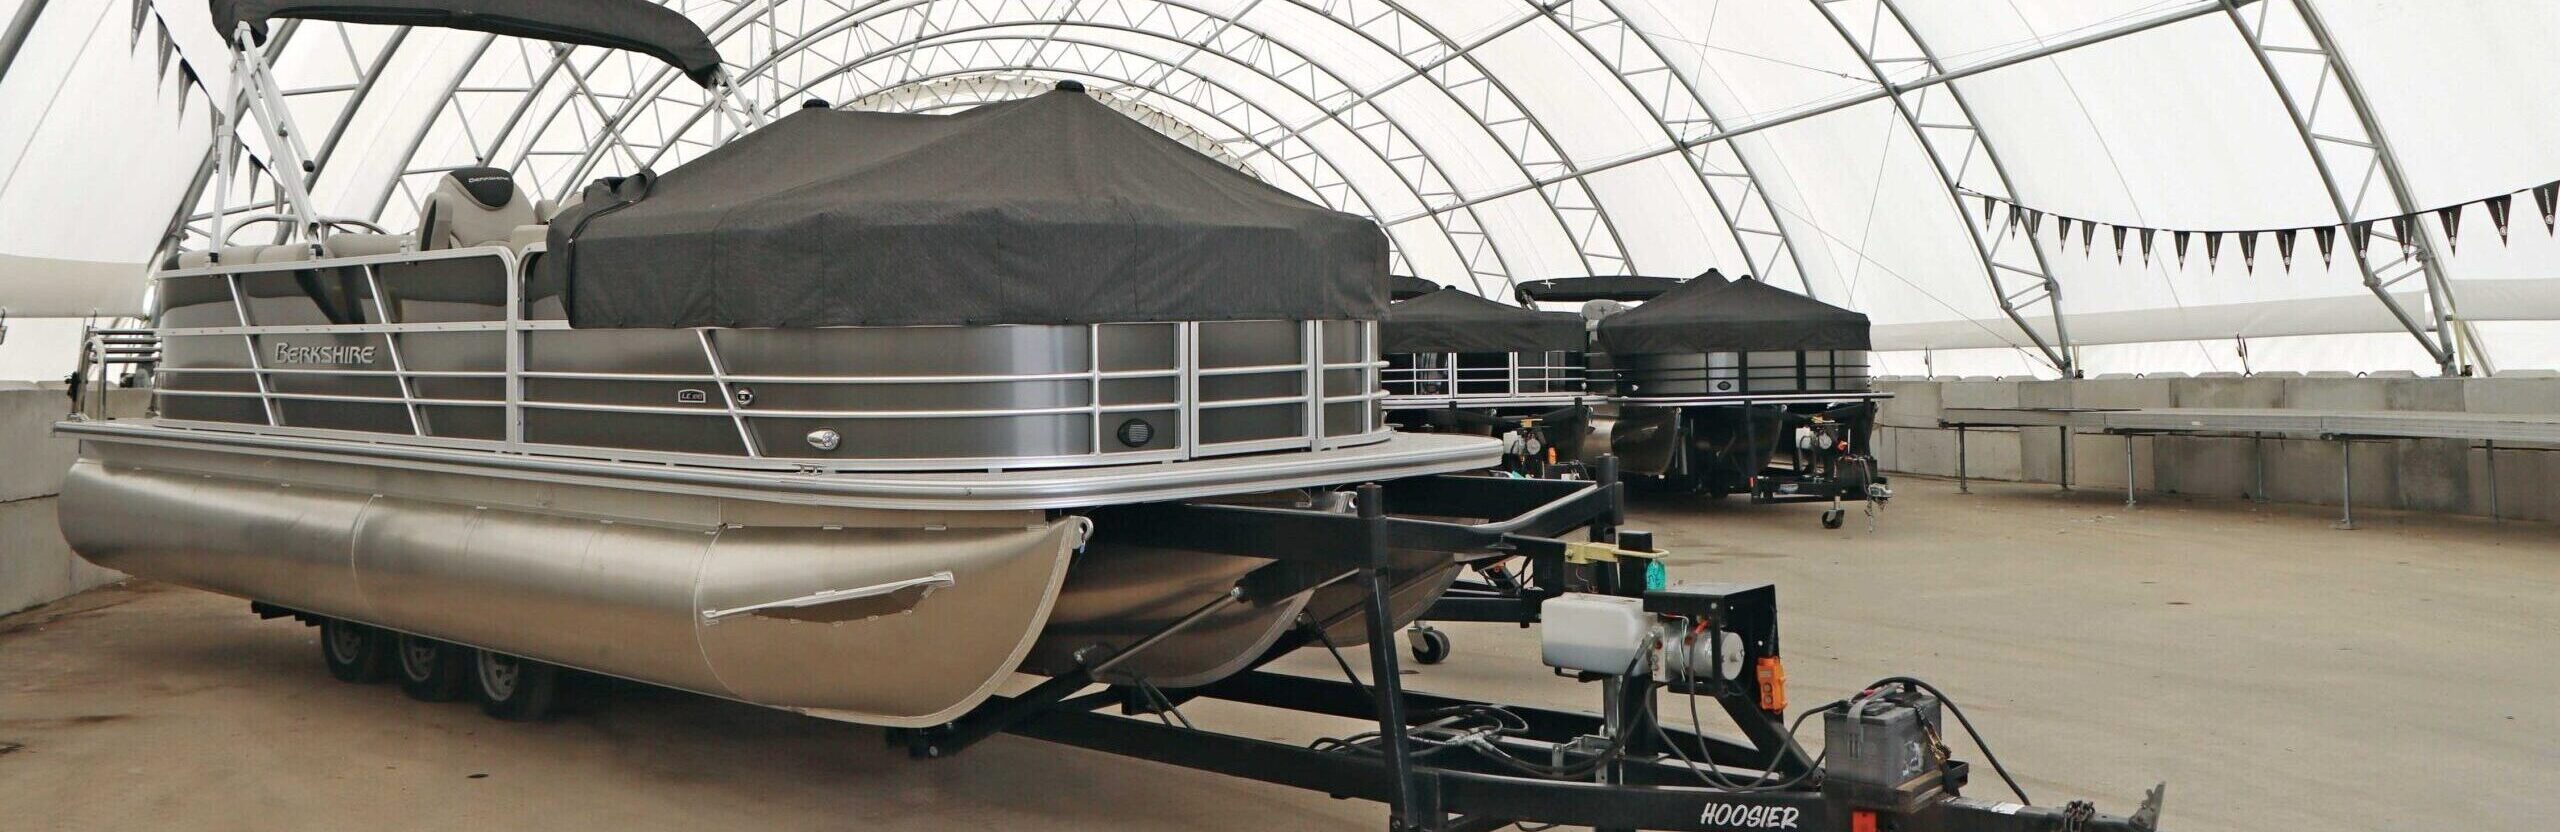 boats inside fabric marina storage structure